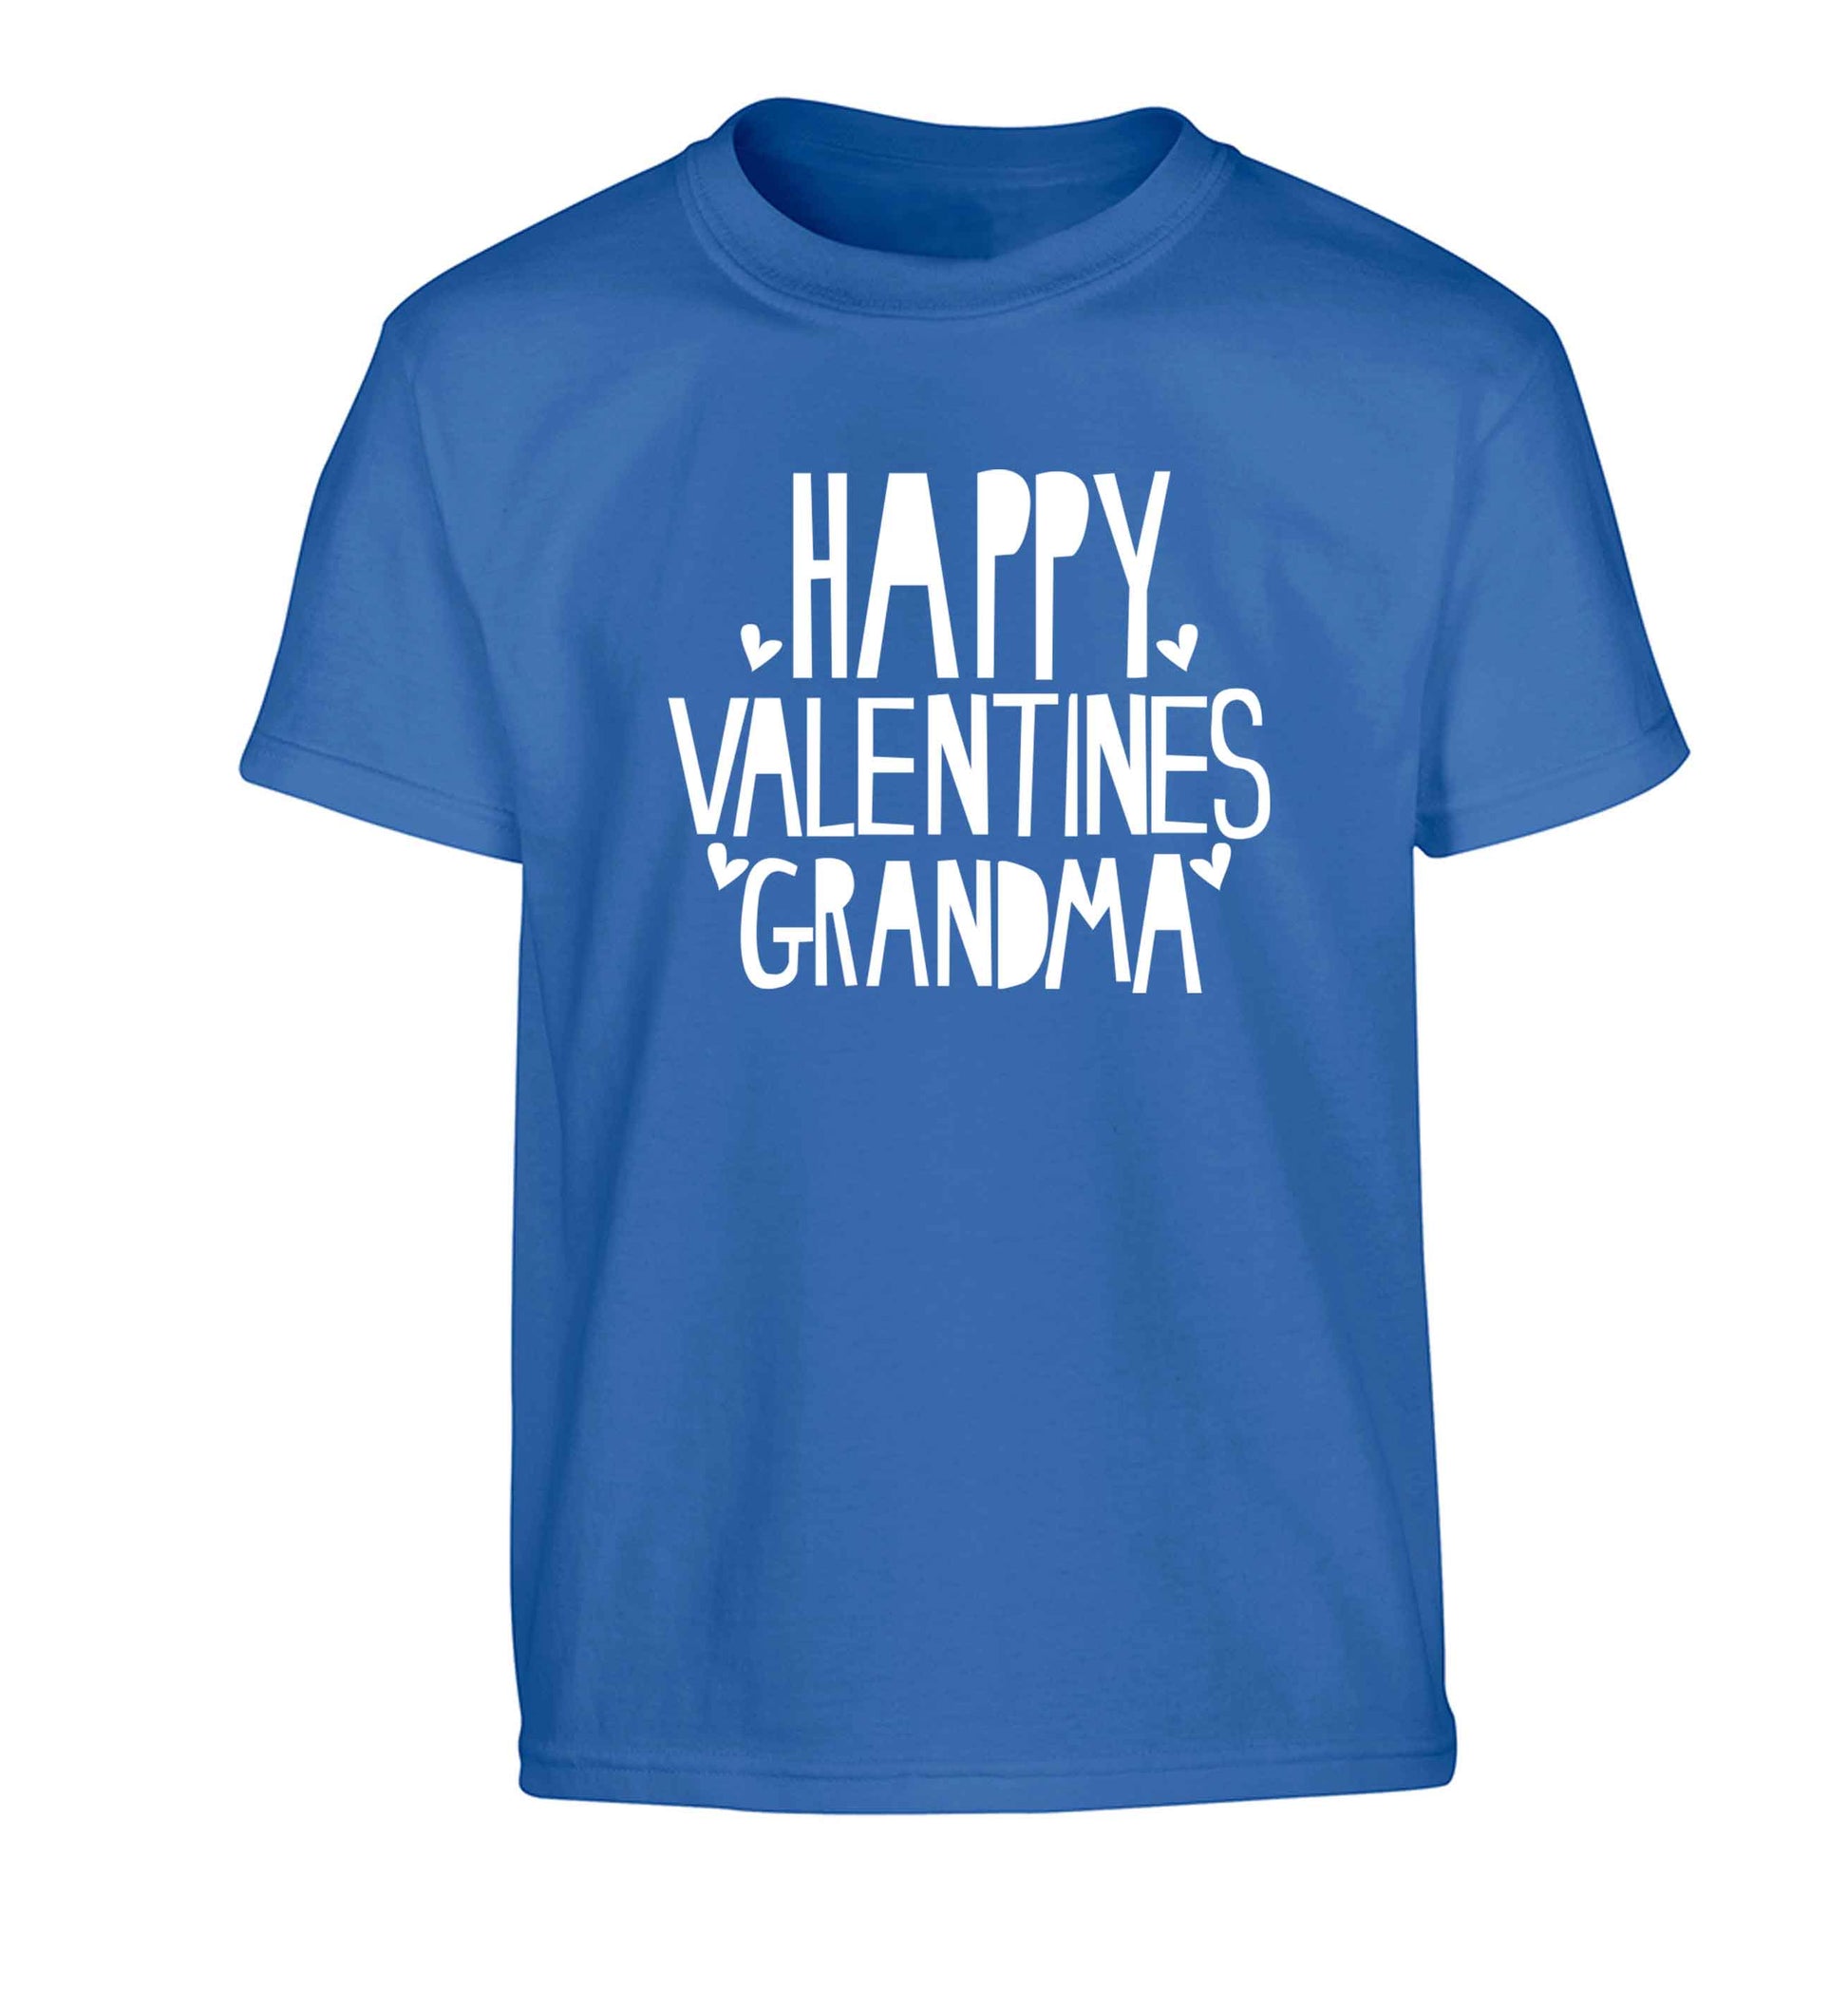 Happy valentines grandma Children's blue Tshirt 12-13 Years